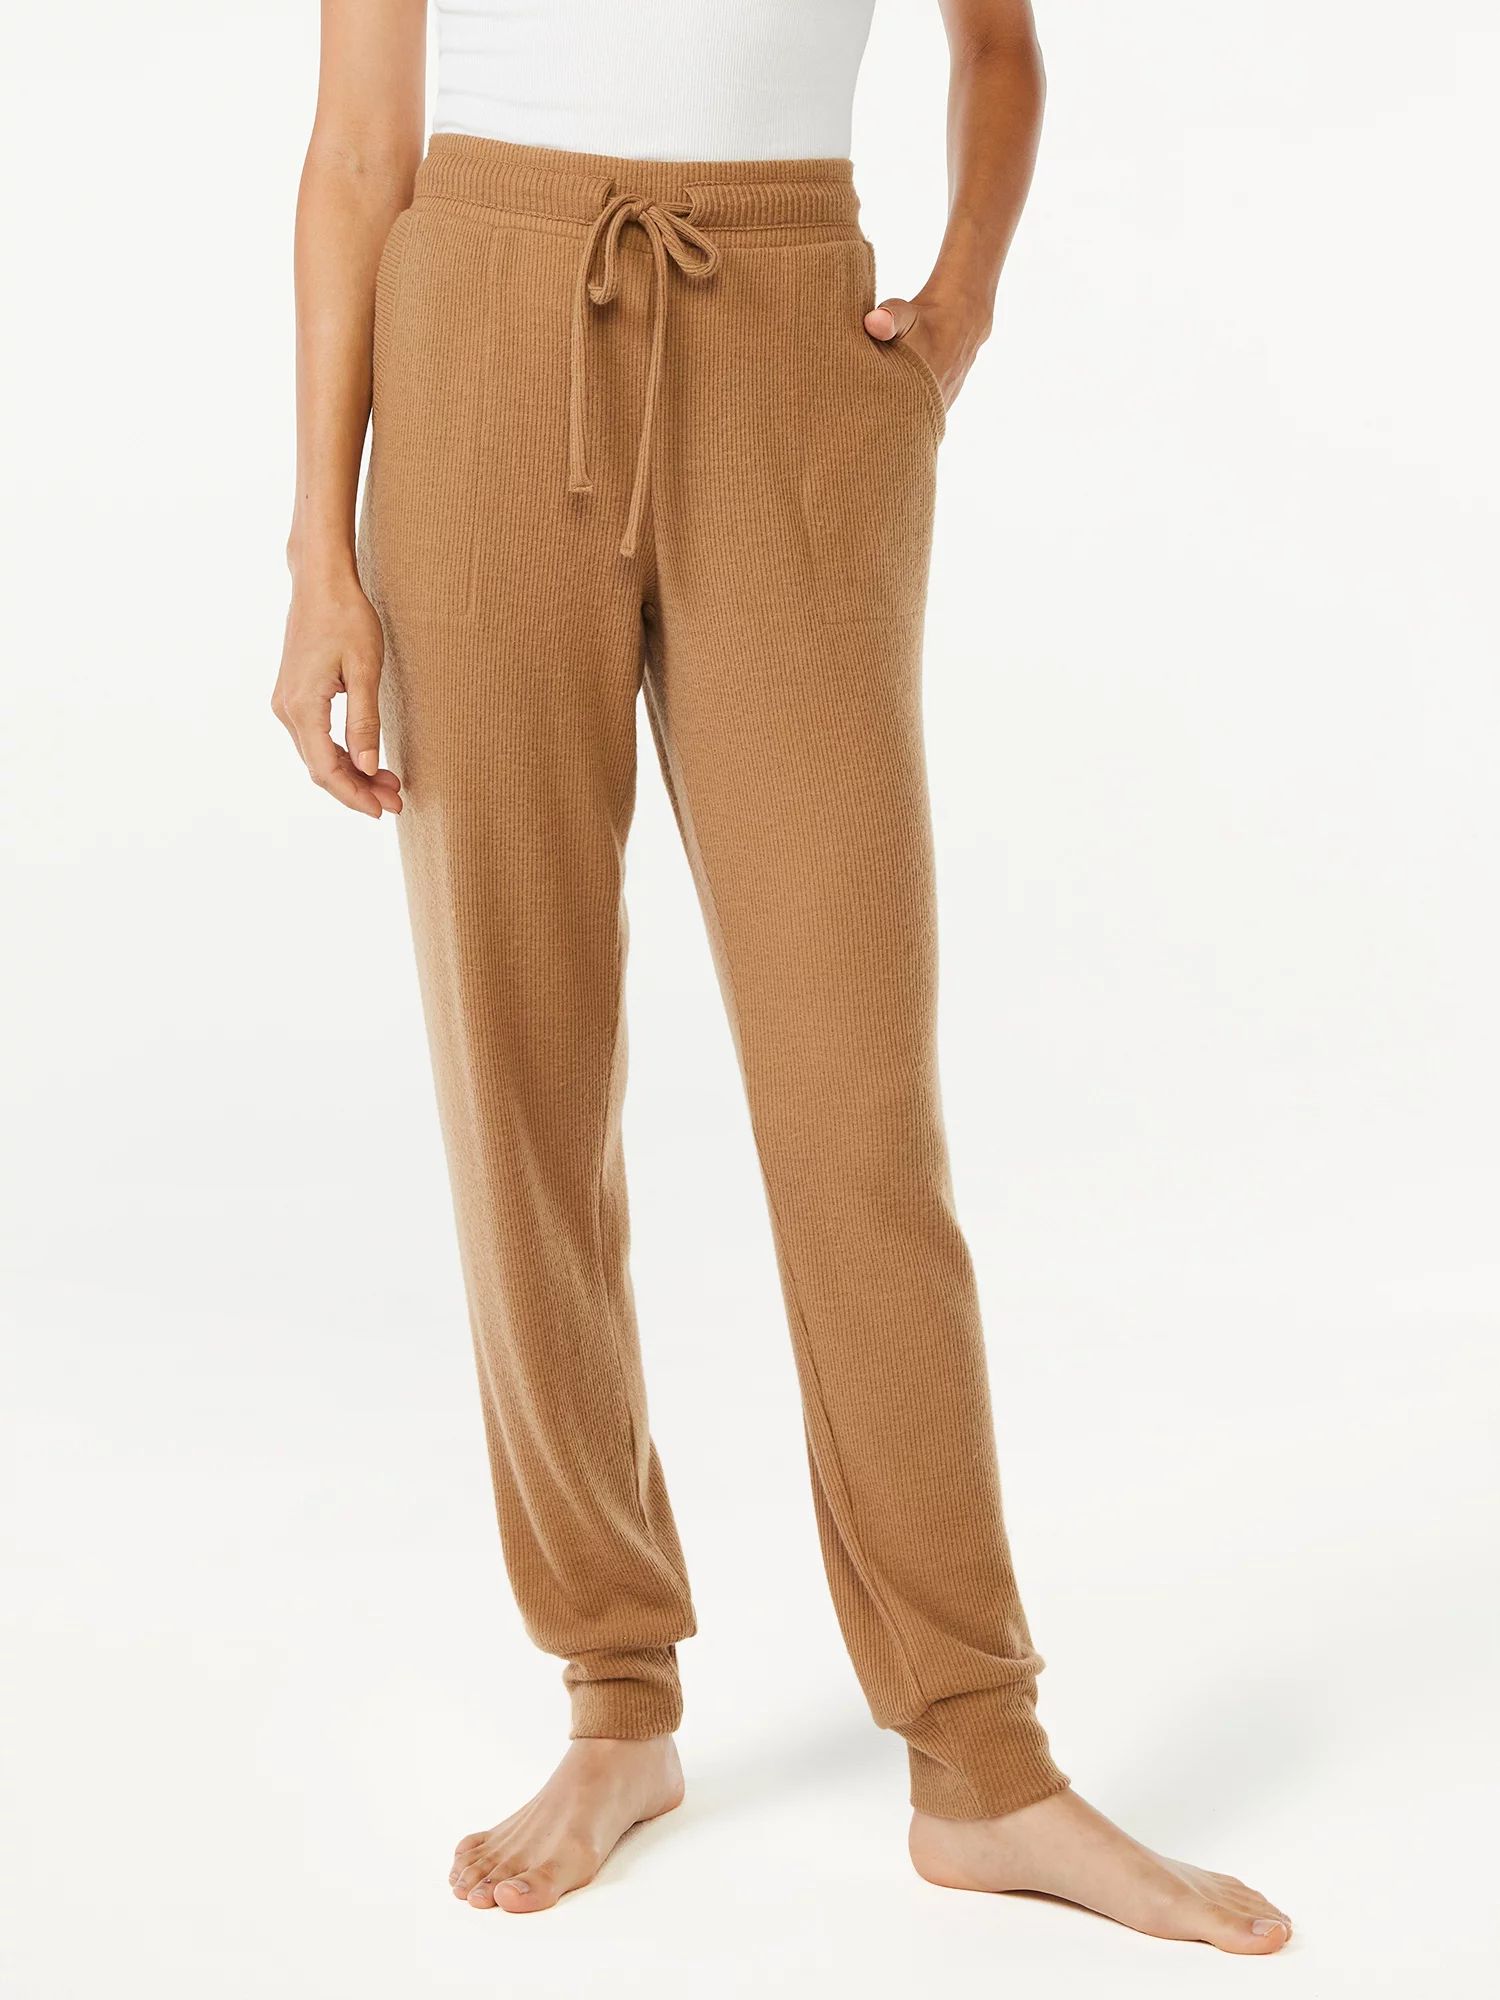 Joyspun Women's Pajama Sleep Jogger Pant, Sizes up to 3X | Walmart (US)